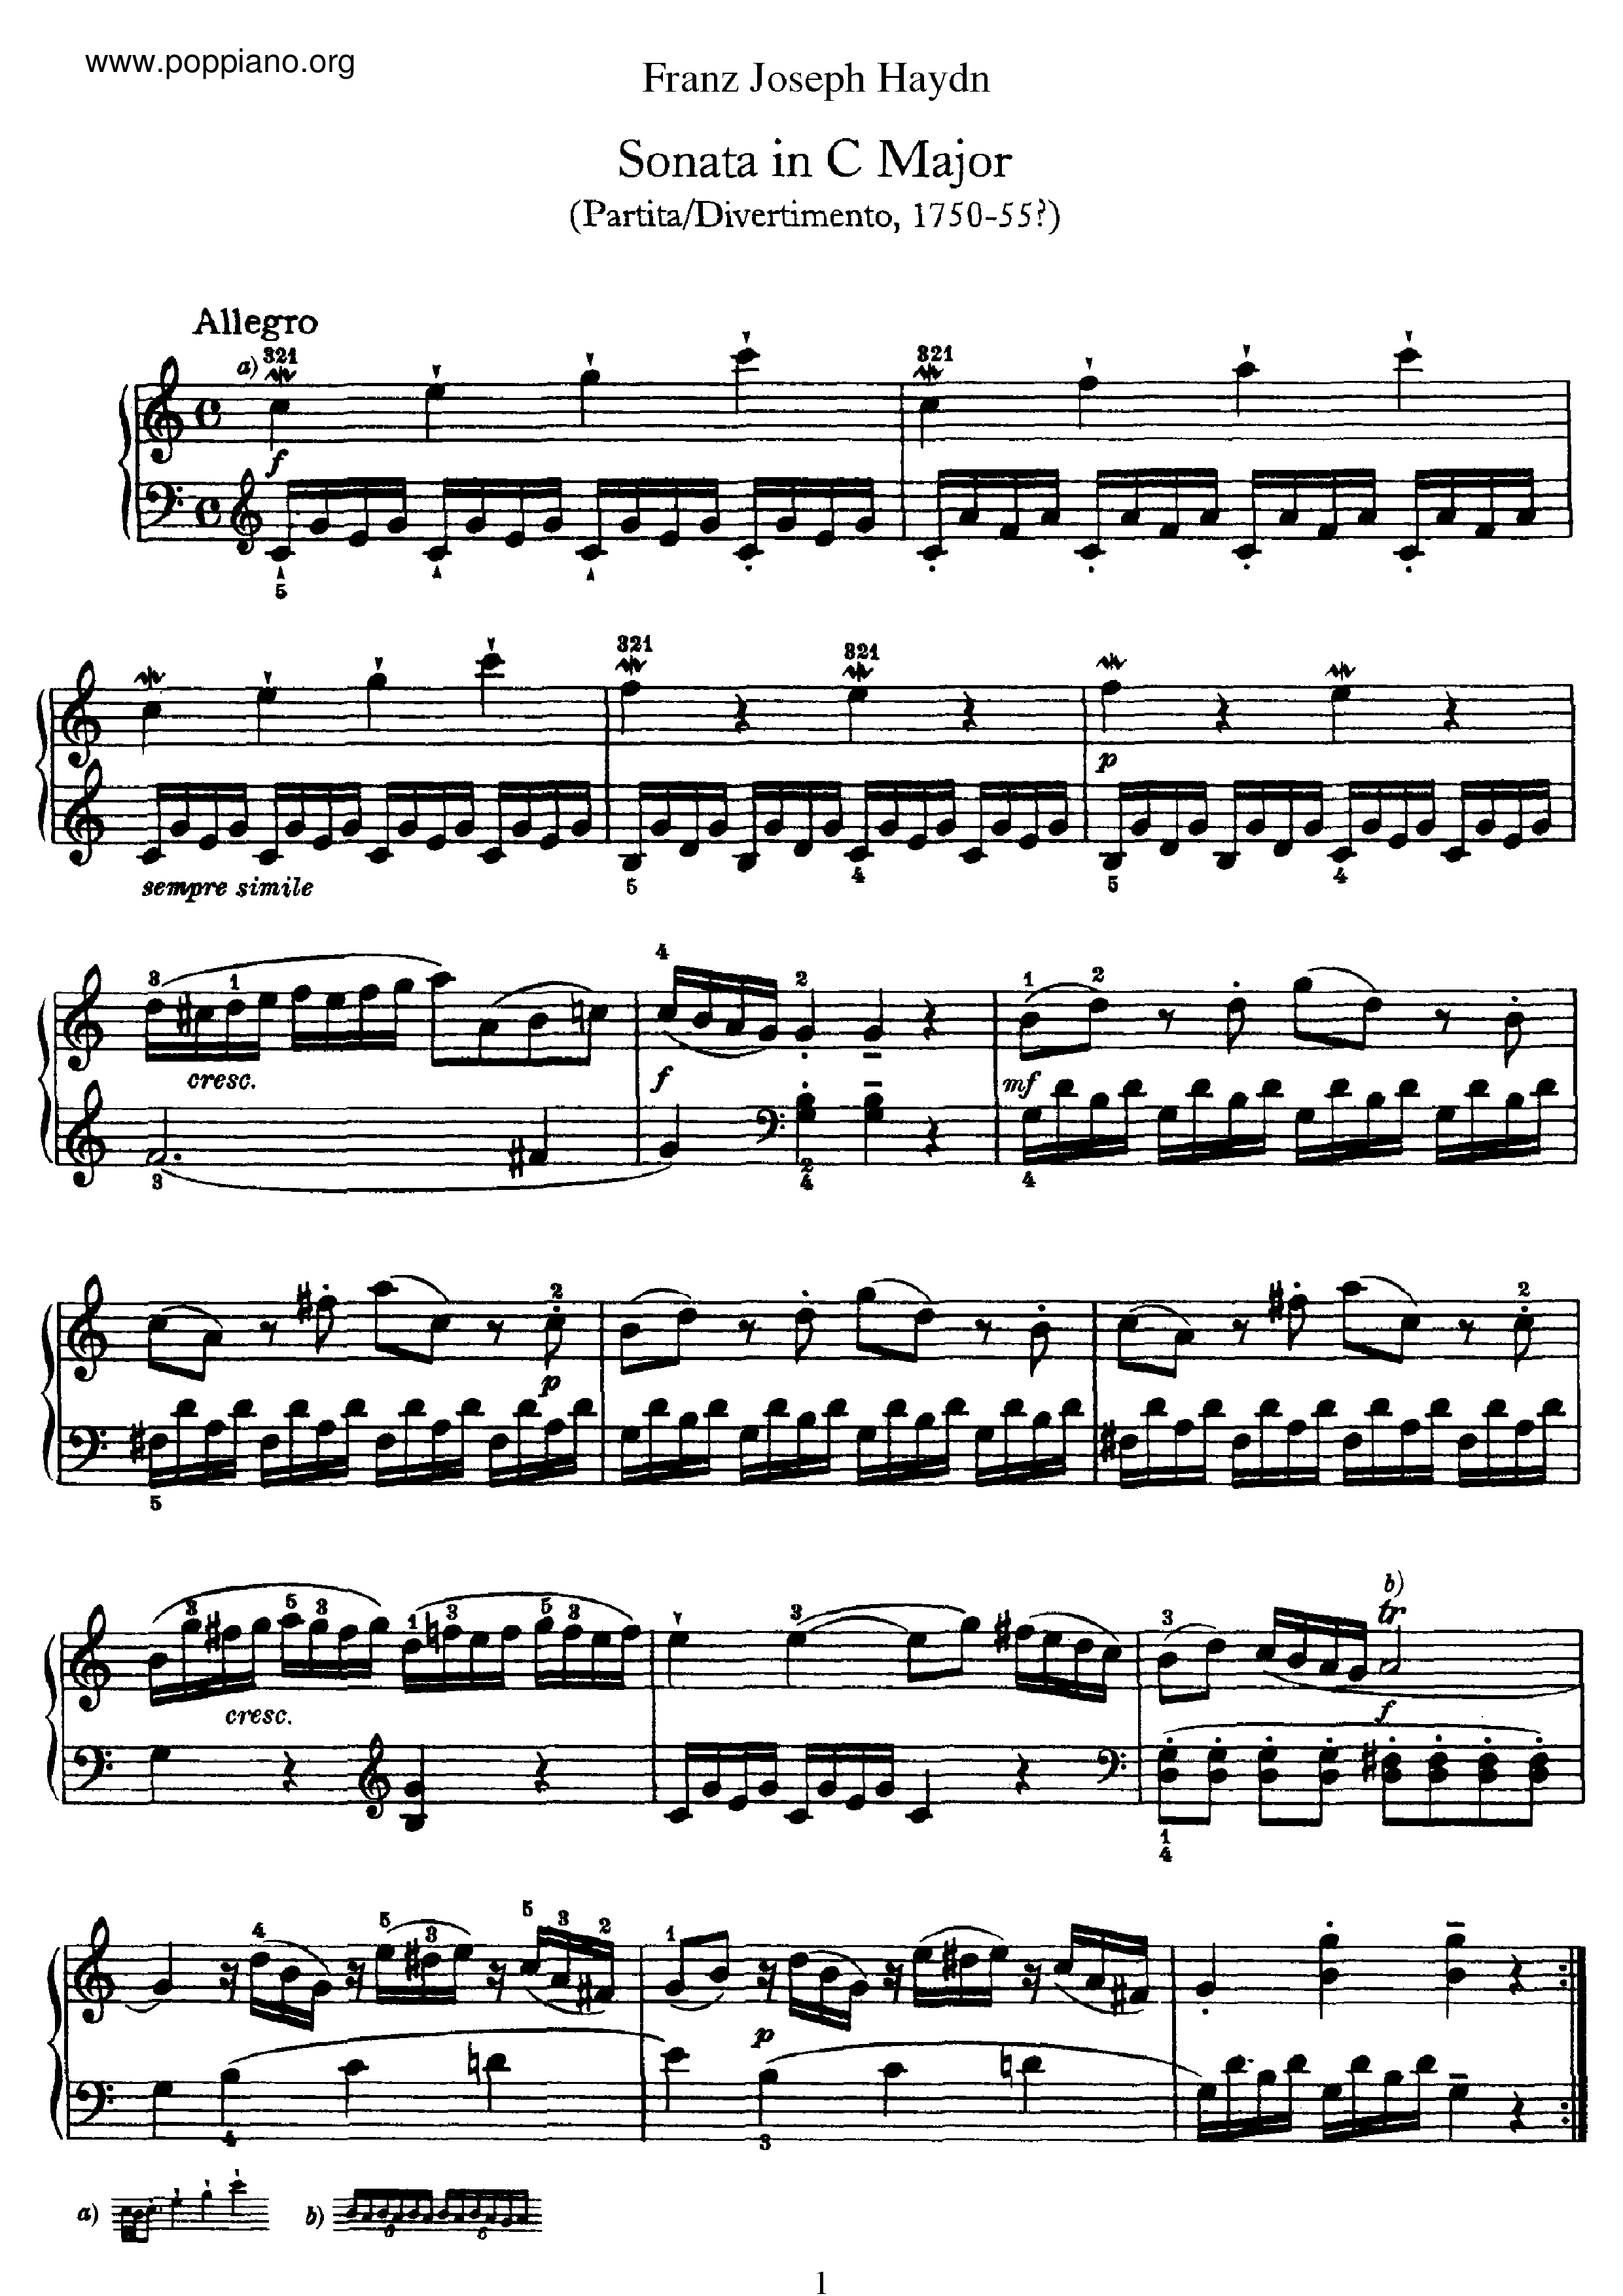 Sonata No.1 in C major琴谱